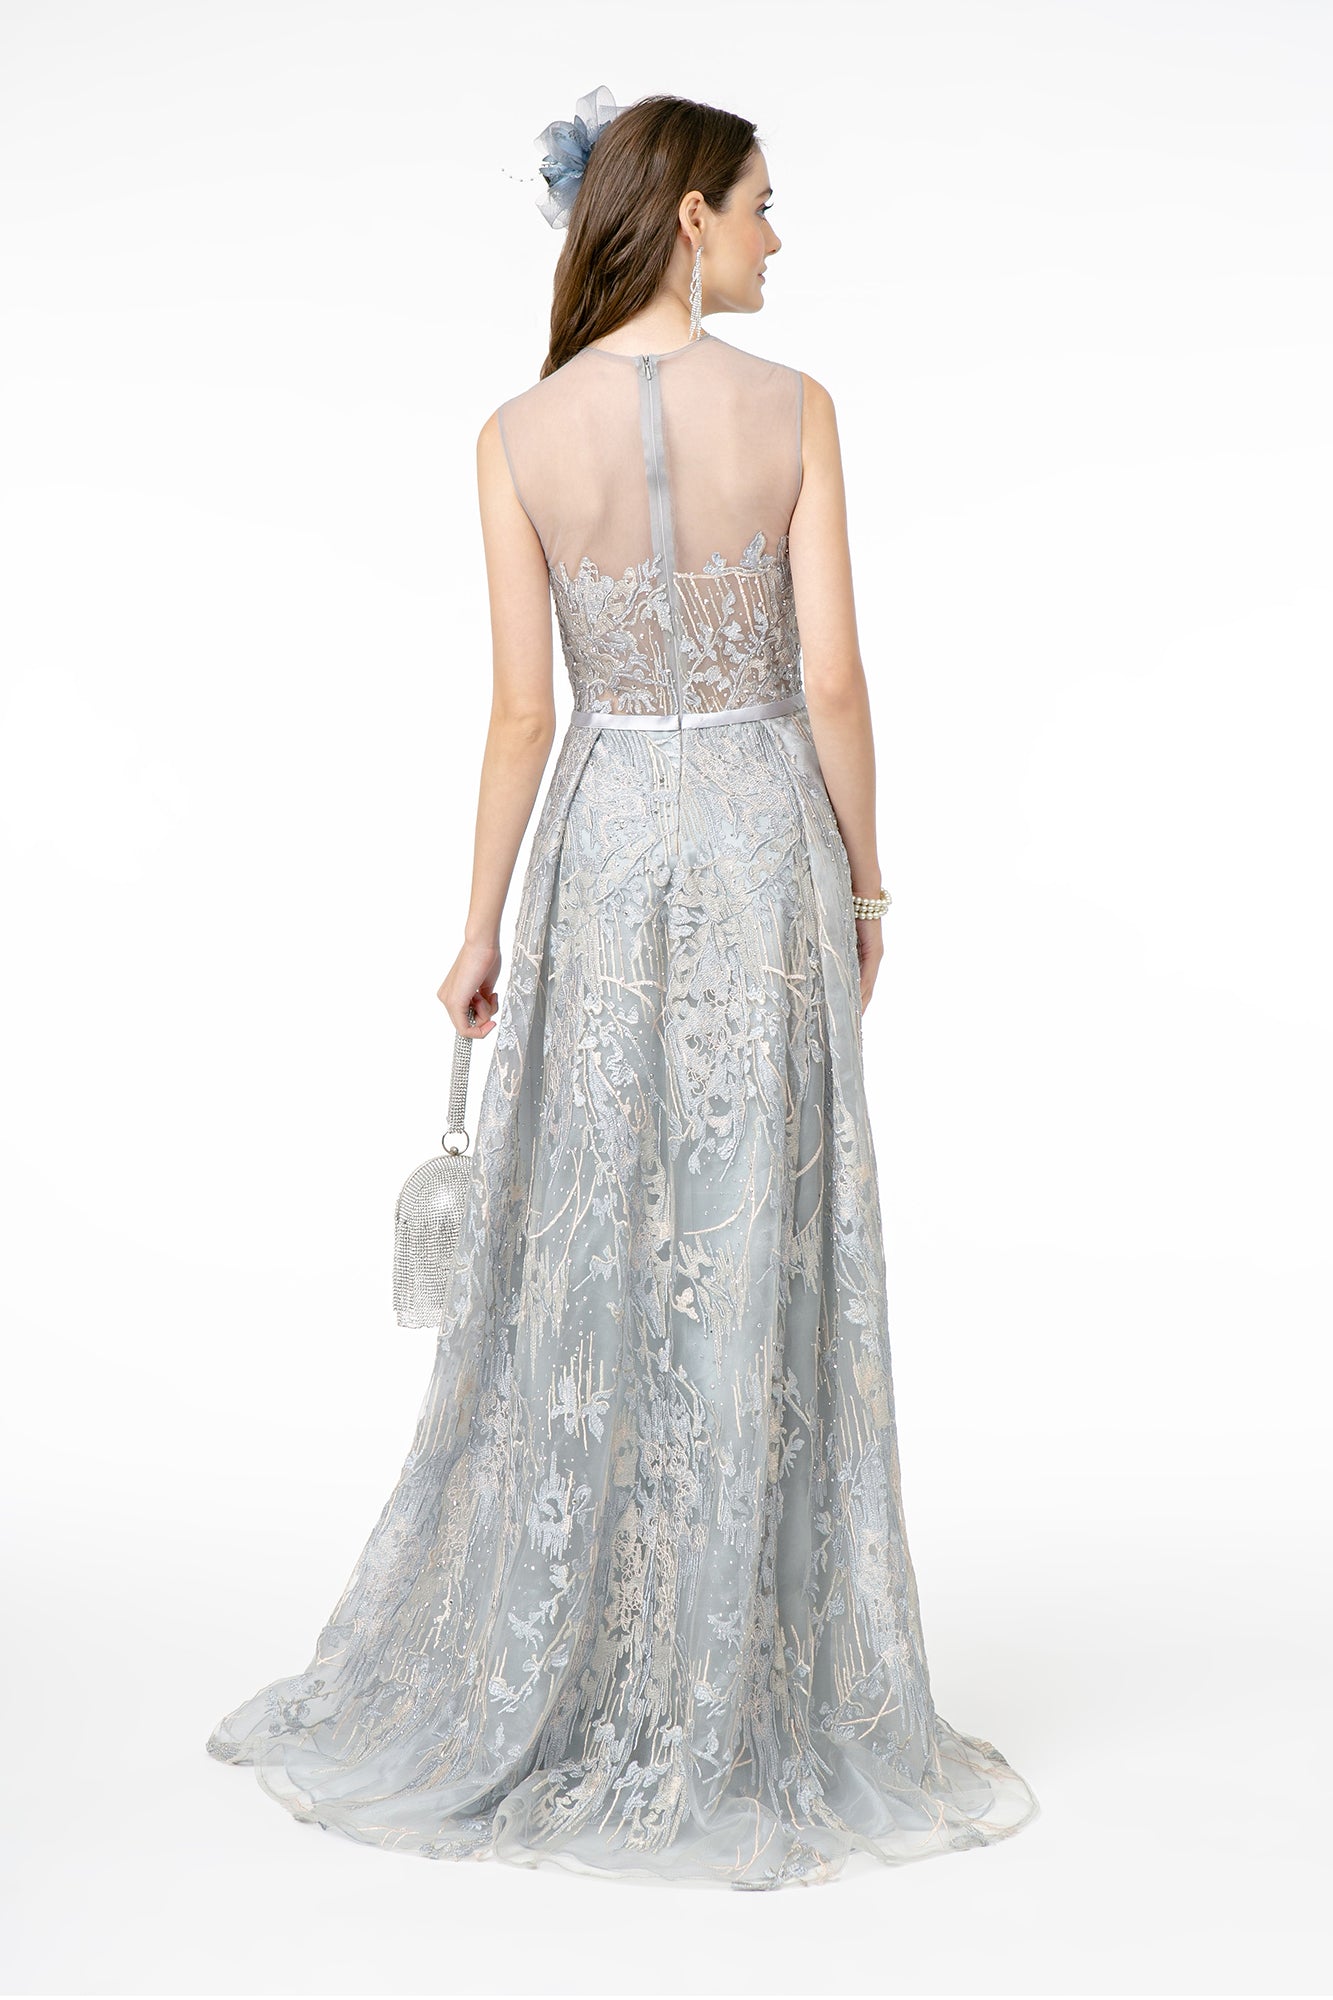 Lace Embellished A-Line Long Dress GLGL2835-SPECIAL-smcfashion.com